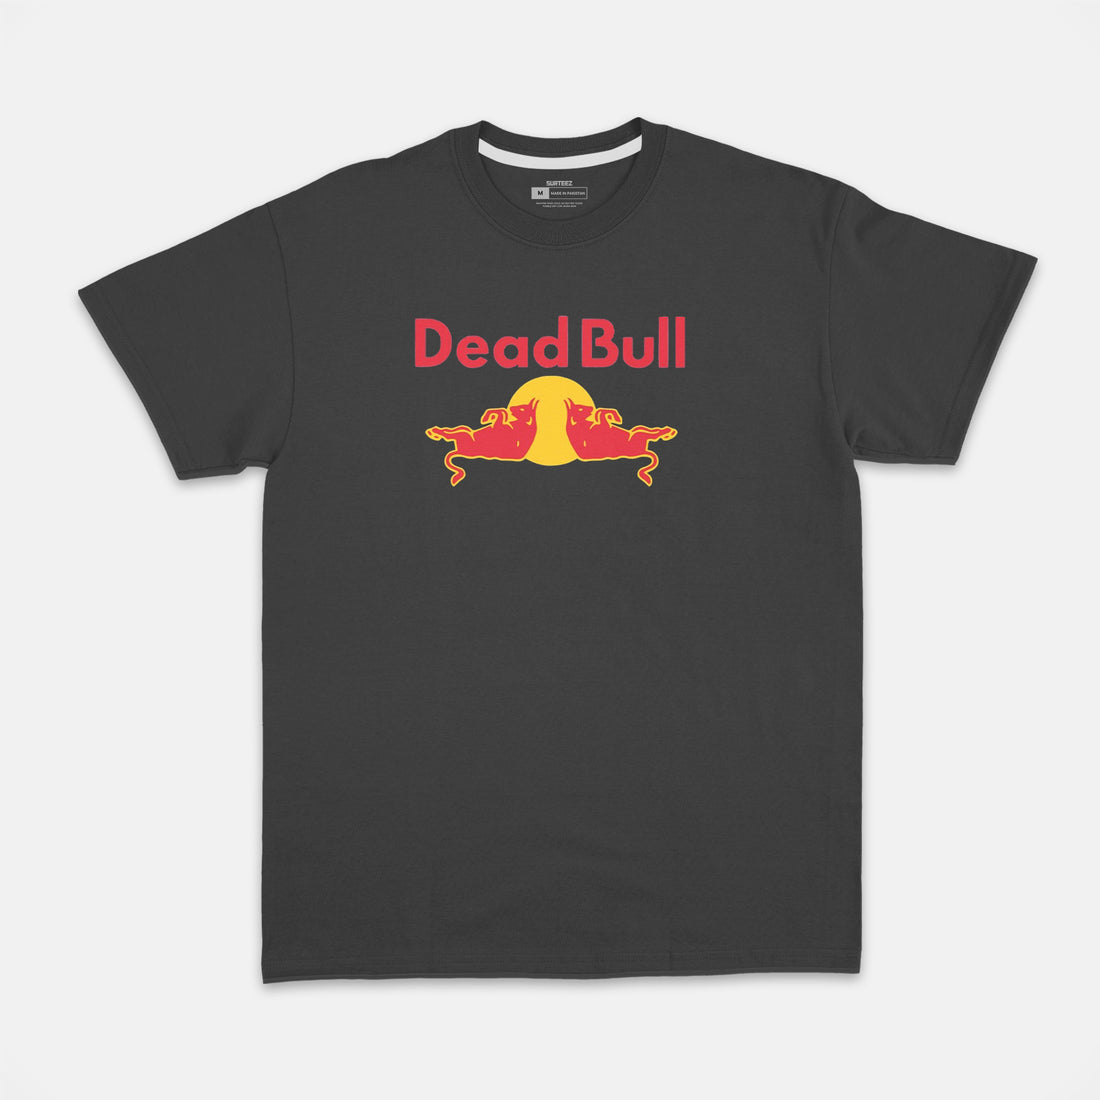 DeadBull Graphic Tee